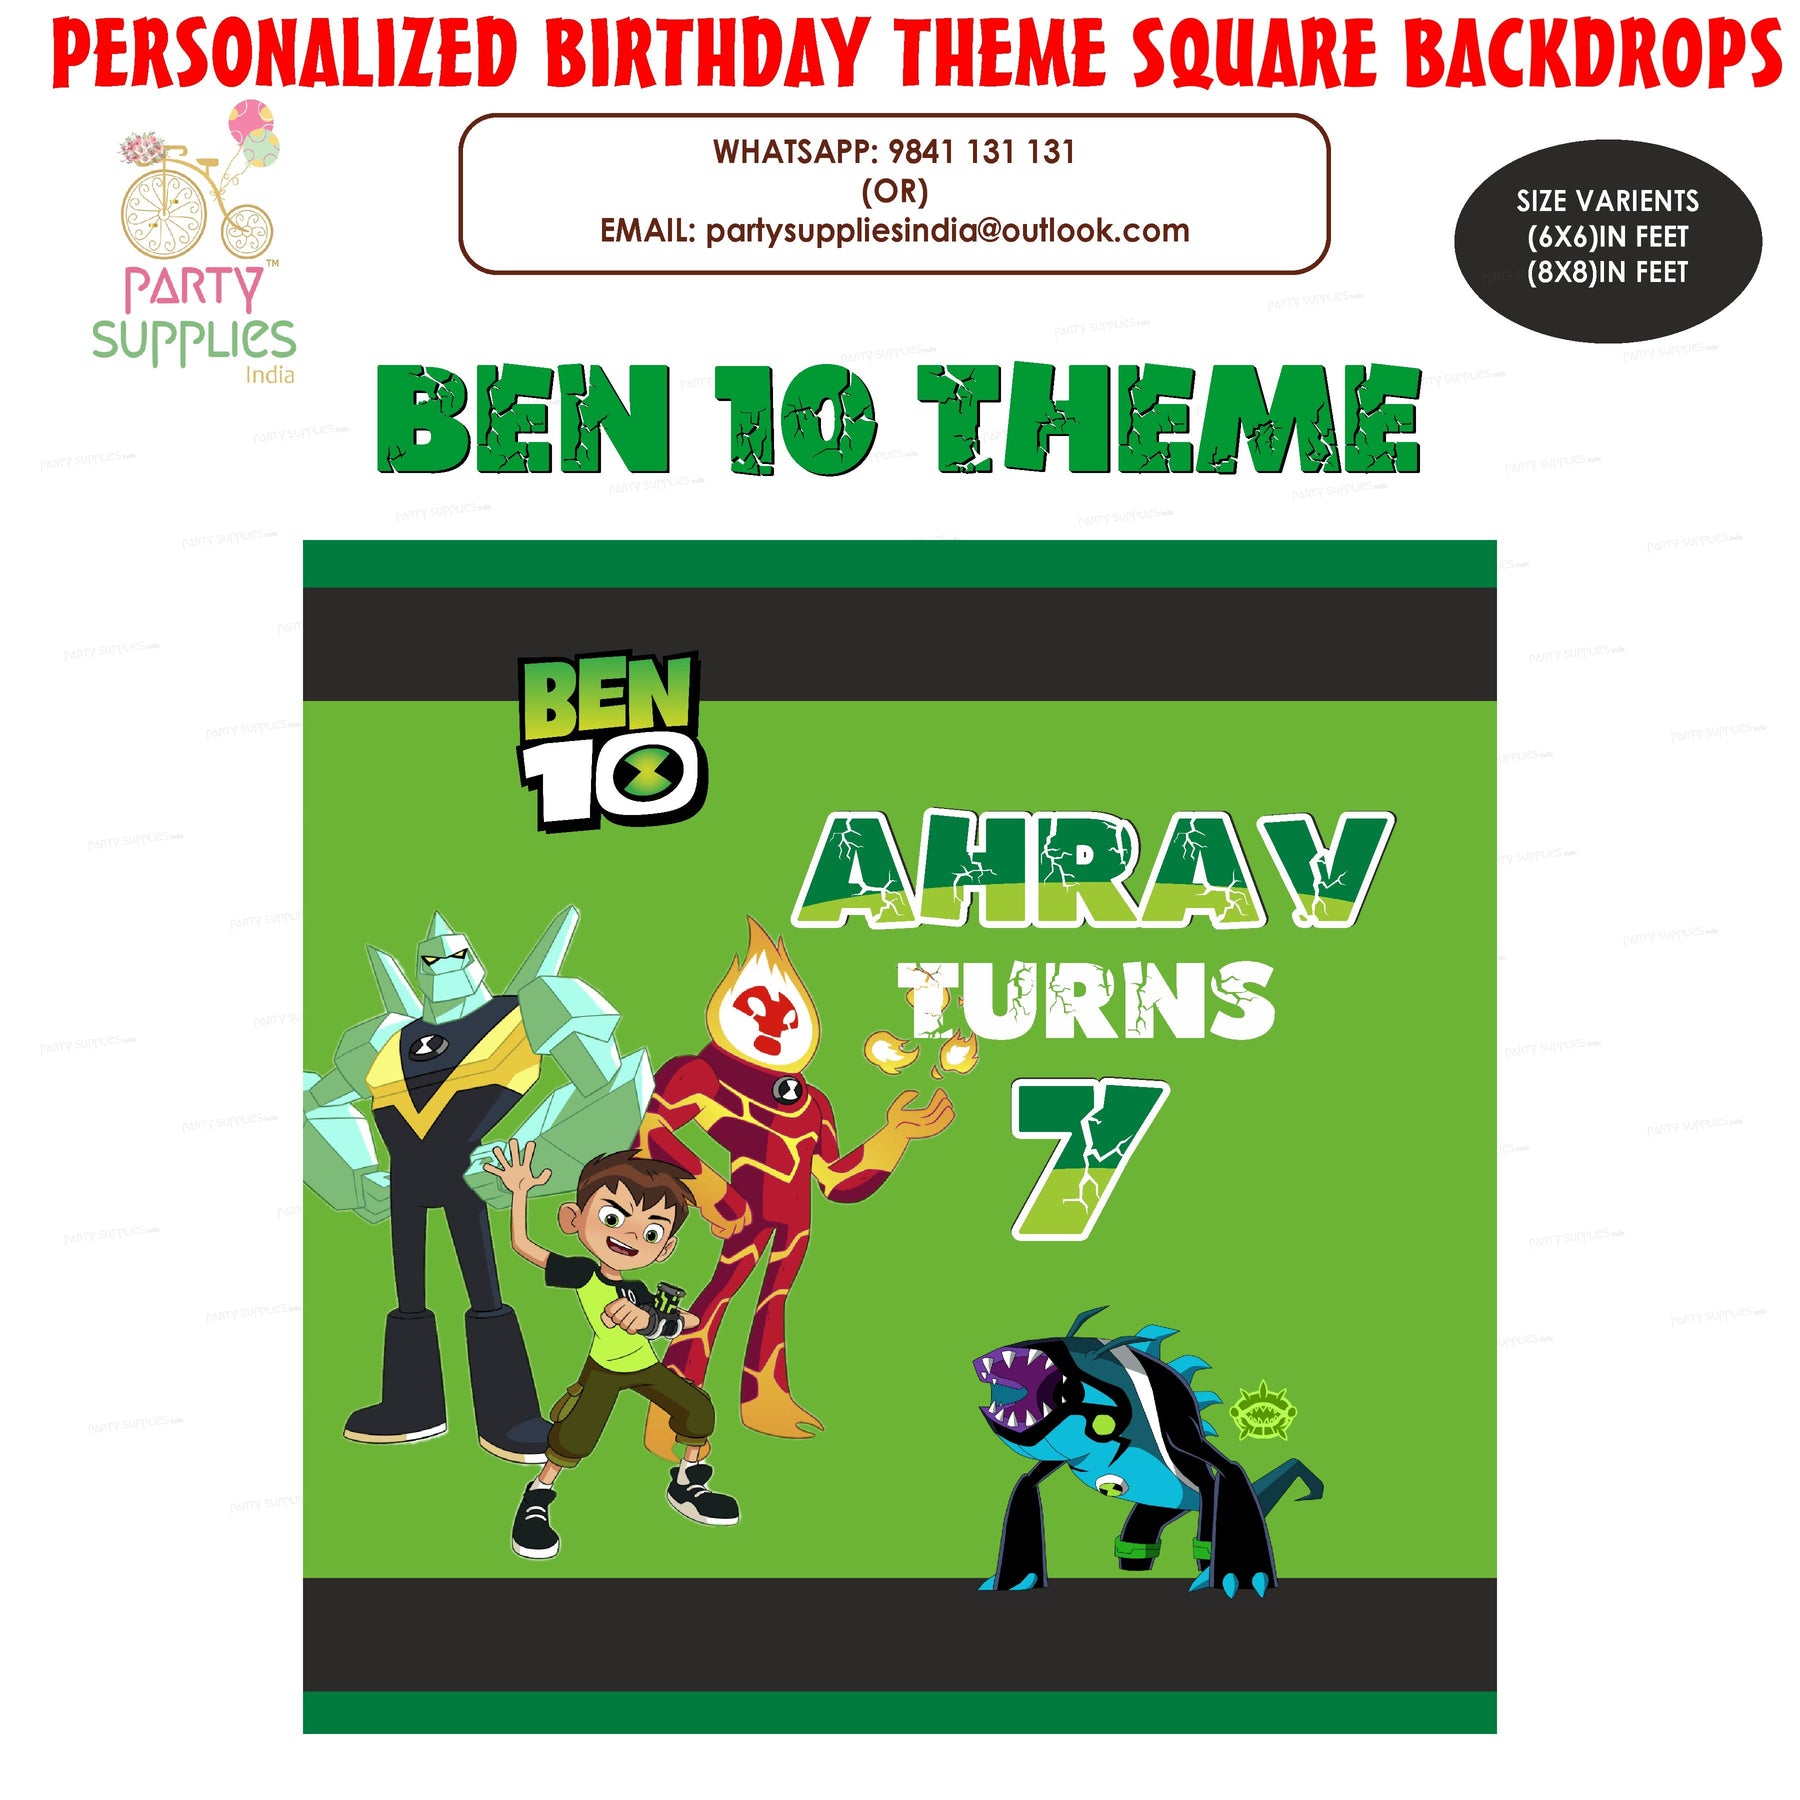 PSI Ben 10 Theme Classic Square Backdrop